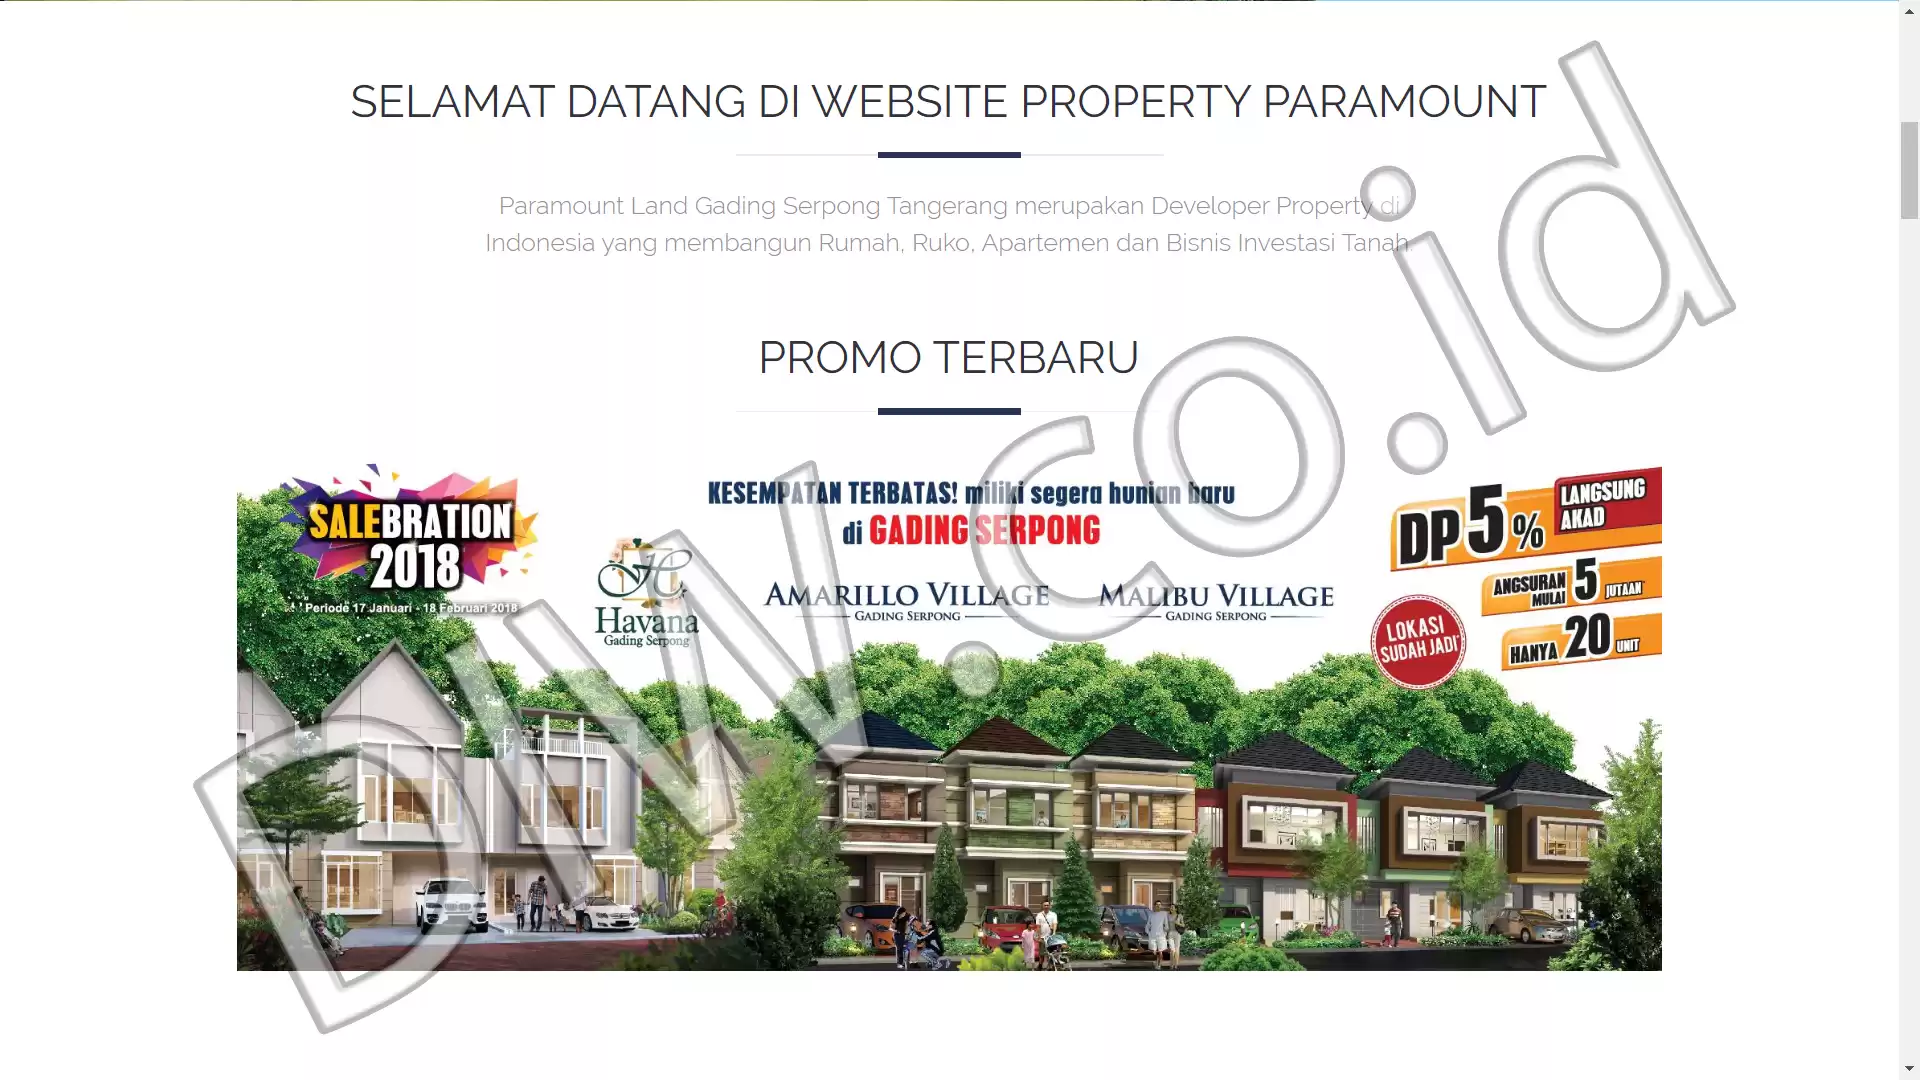 Portfolio - Property Paramount - DIW.co.id (Digital In Website) Jasa Pembuatan Website dan Program Skripsi